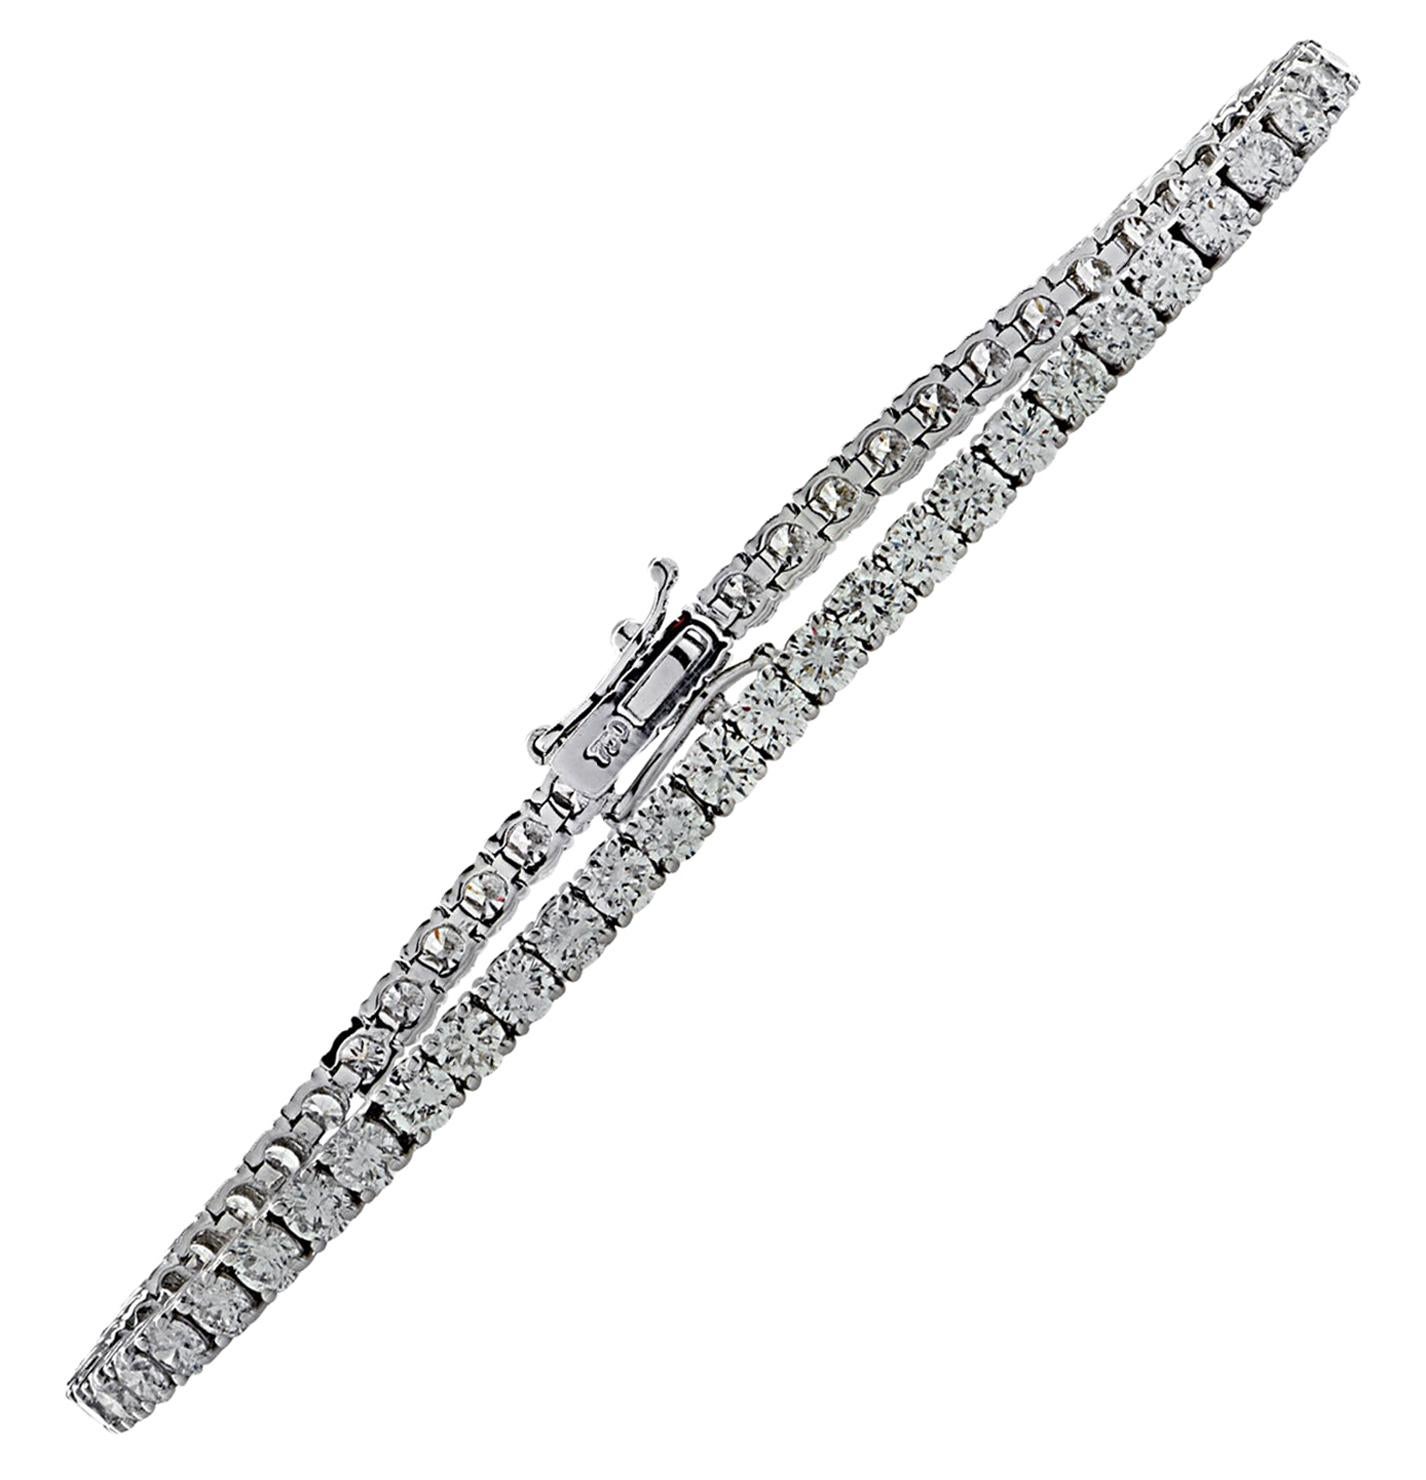 Vivid Diamonds 3.08 Carat Diamond Tennis Bracelet